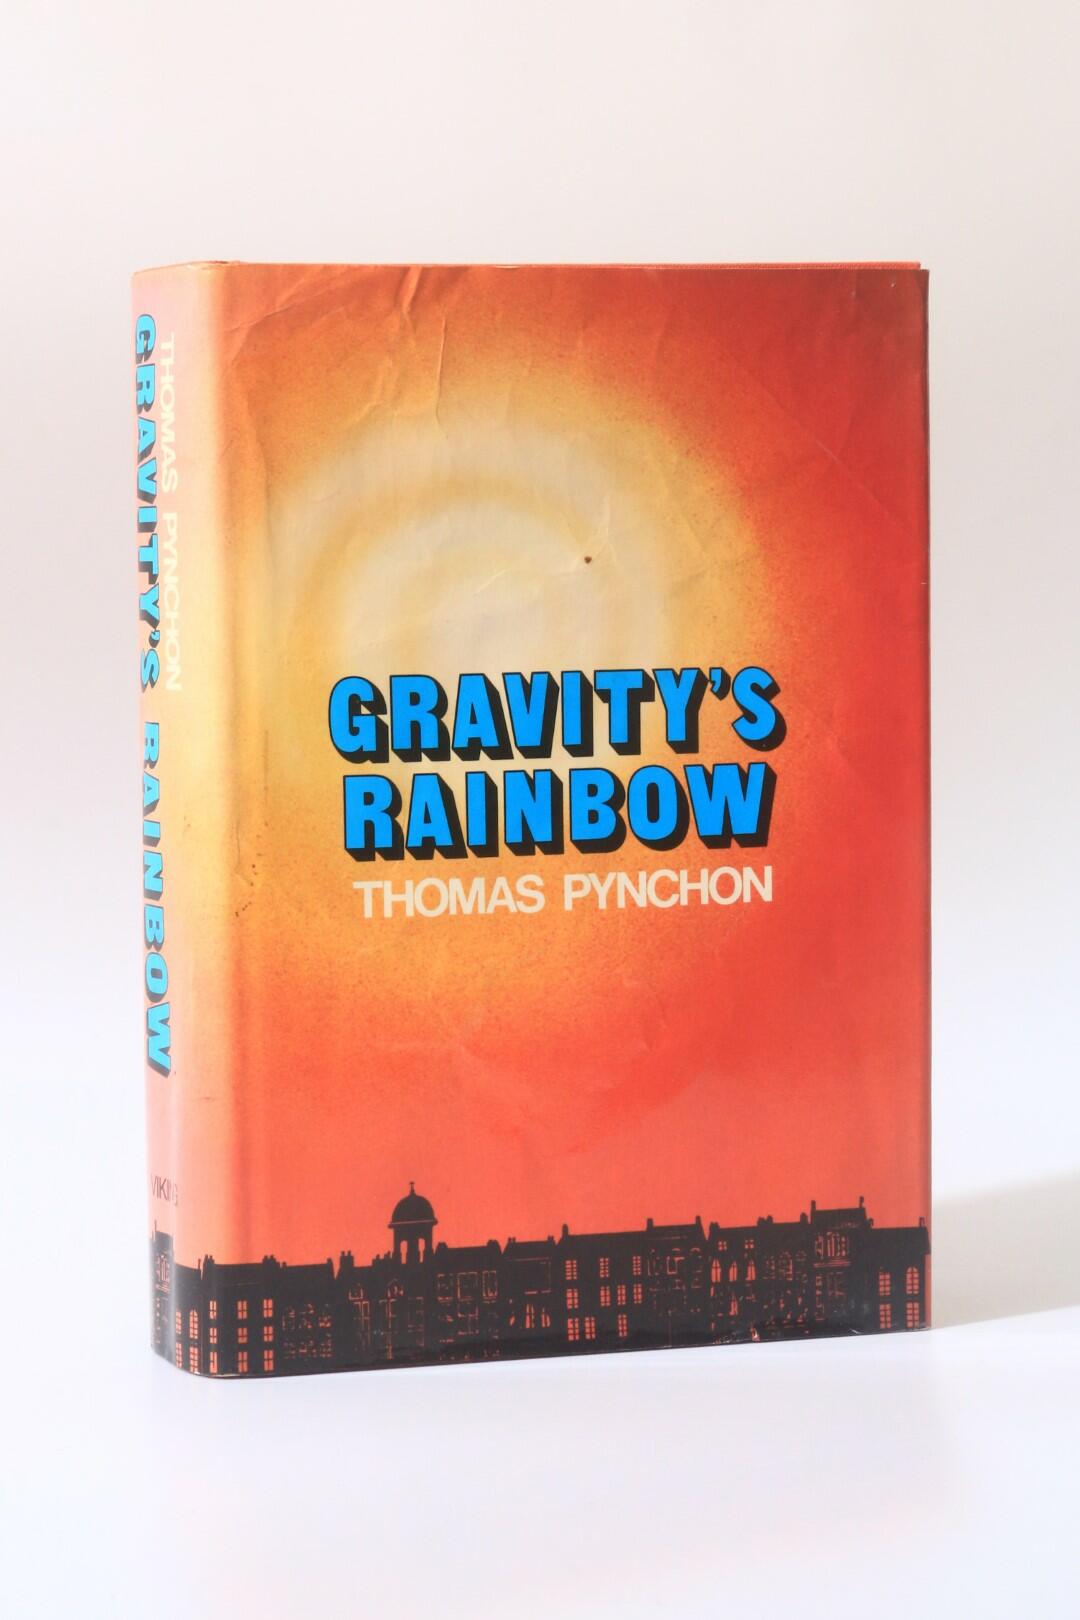 Thomas Pynchon - Gravity's Rainbow - Viking, 1973, First Edition.